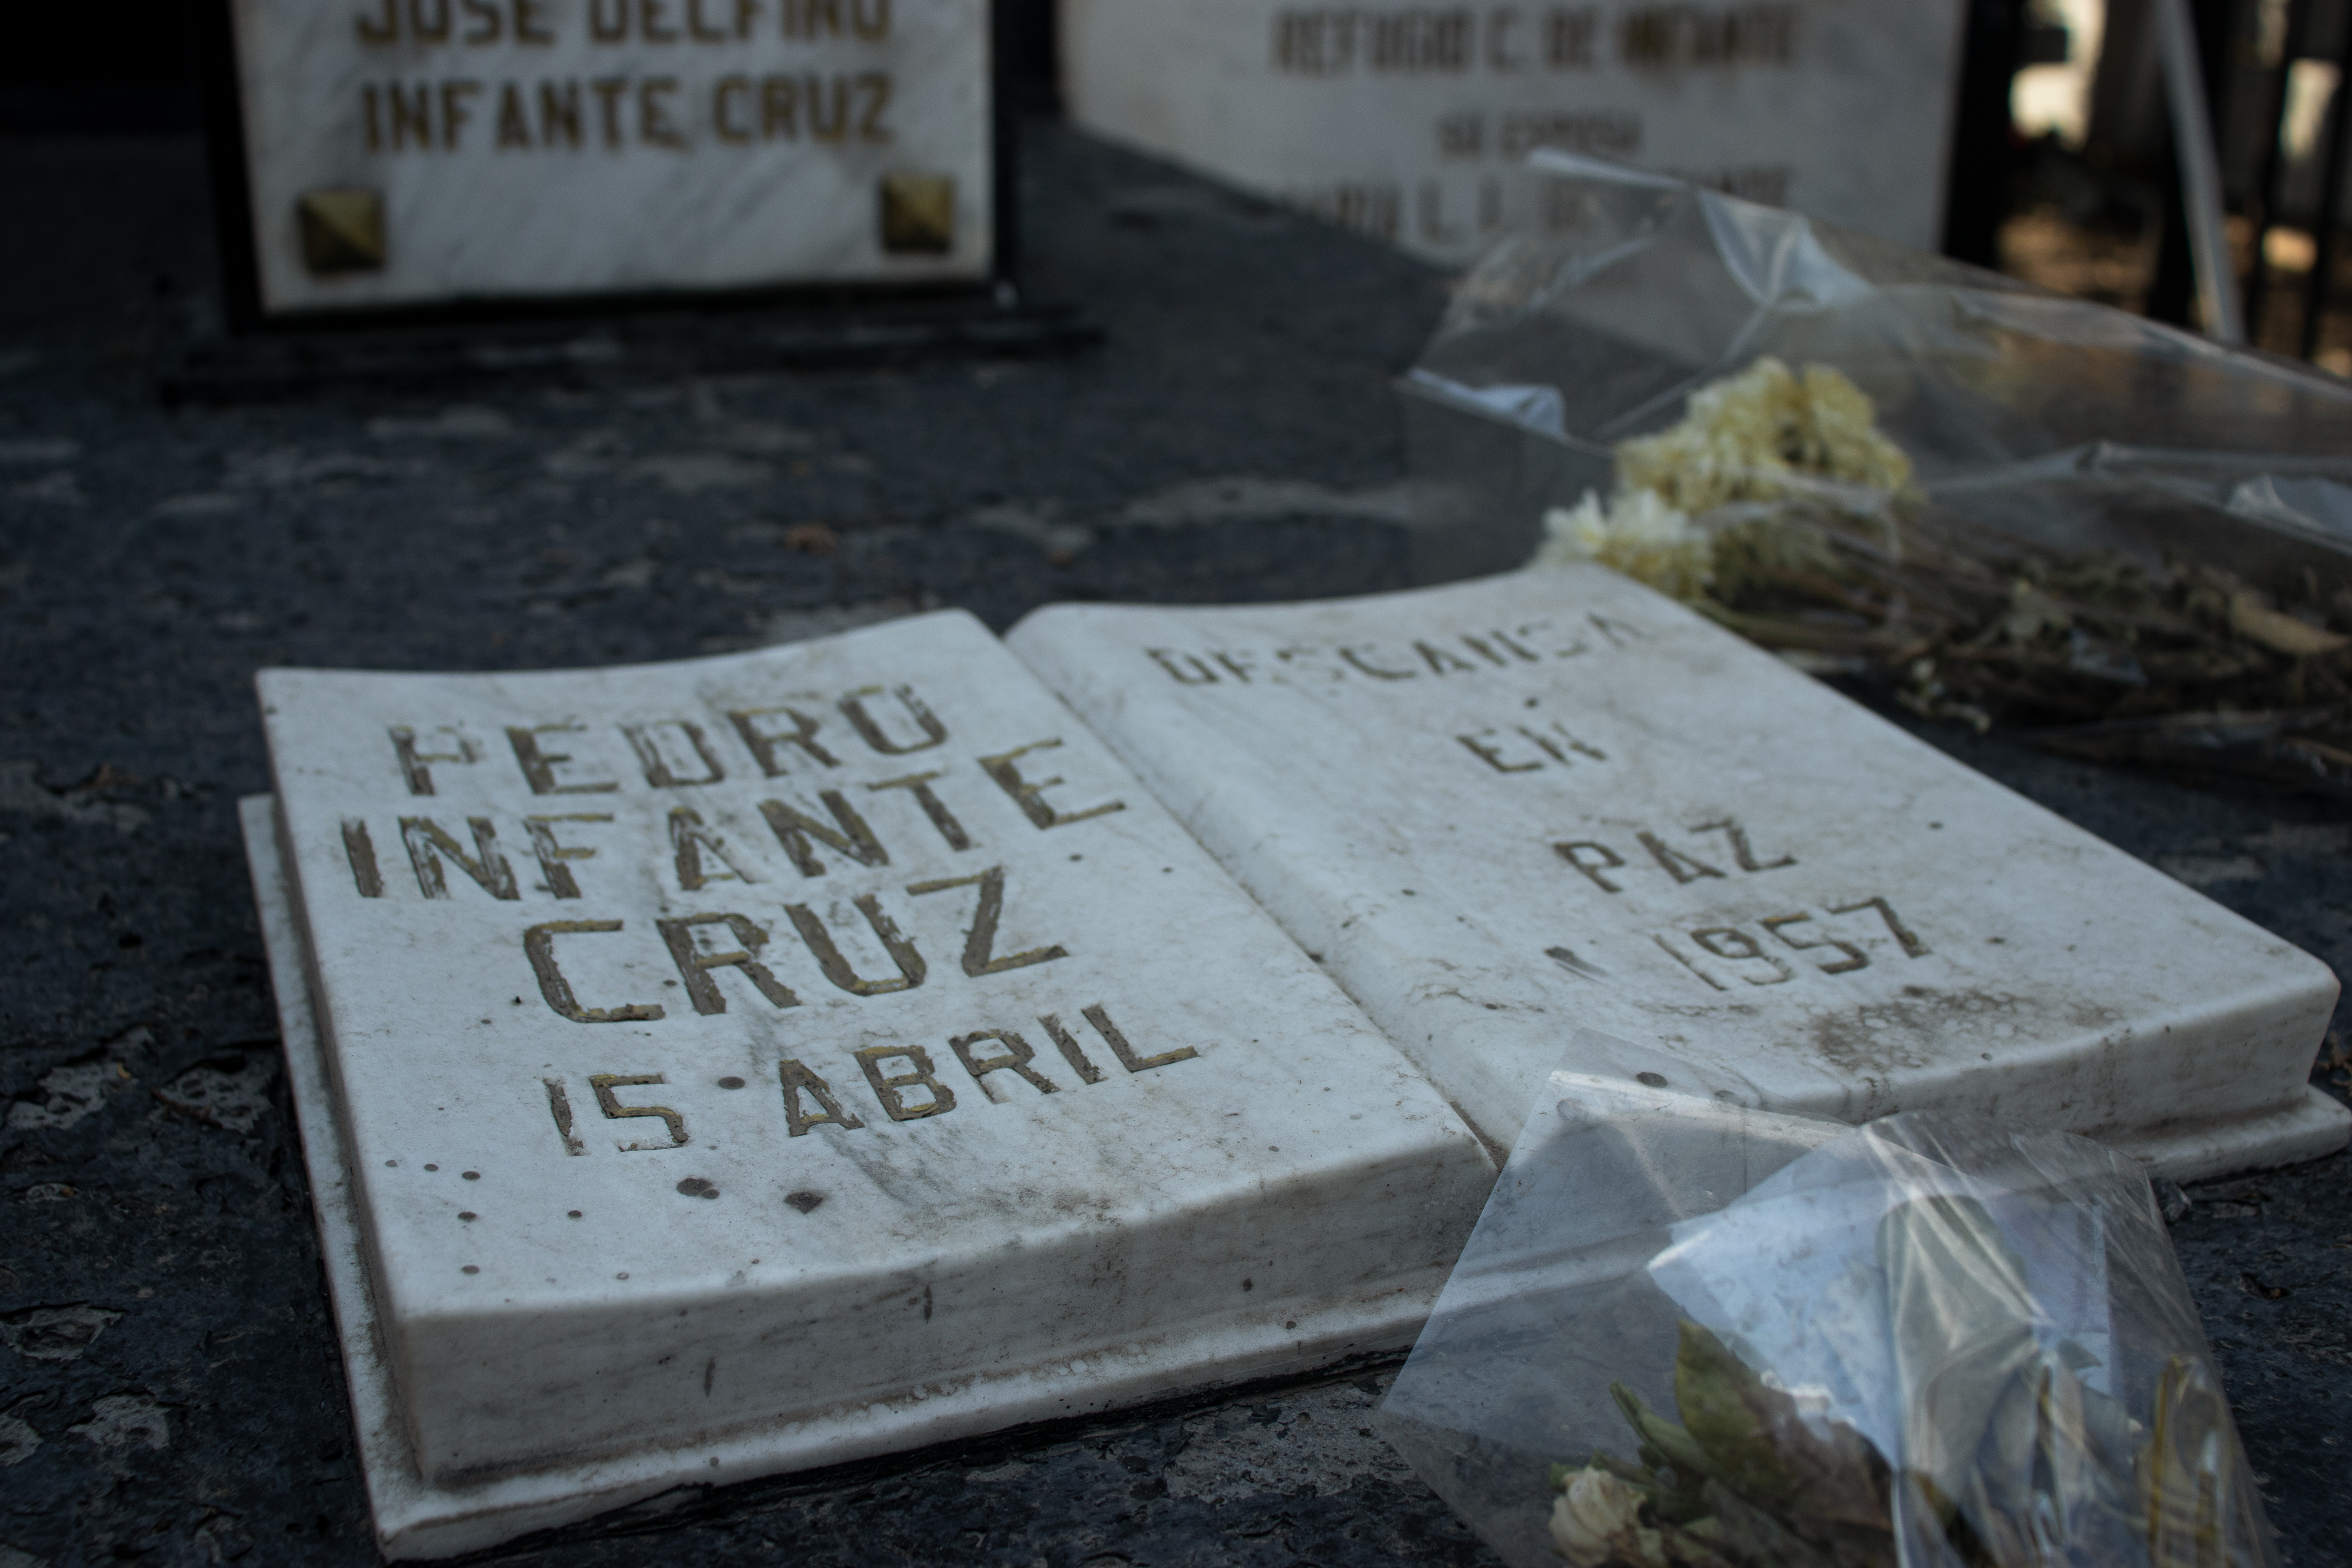 Con pintura casi resquebrajada, la tumba espera el aniversario luctuoso de Pedro Infante Cruz.
Foto: Mau HL / Infobae